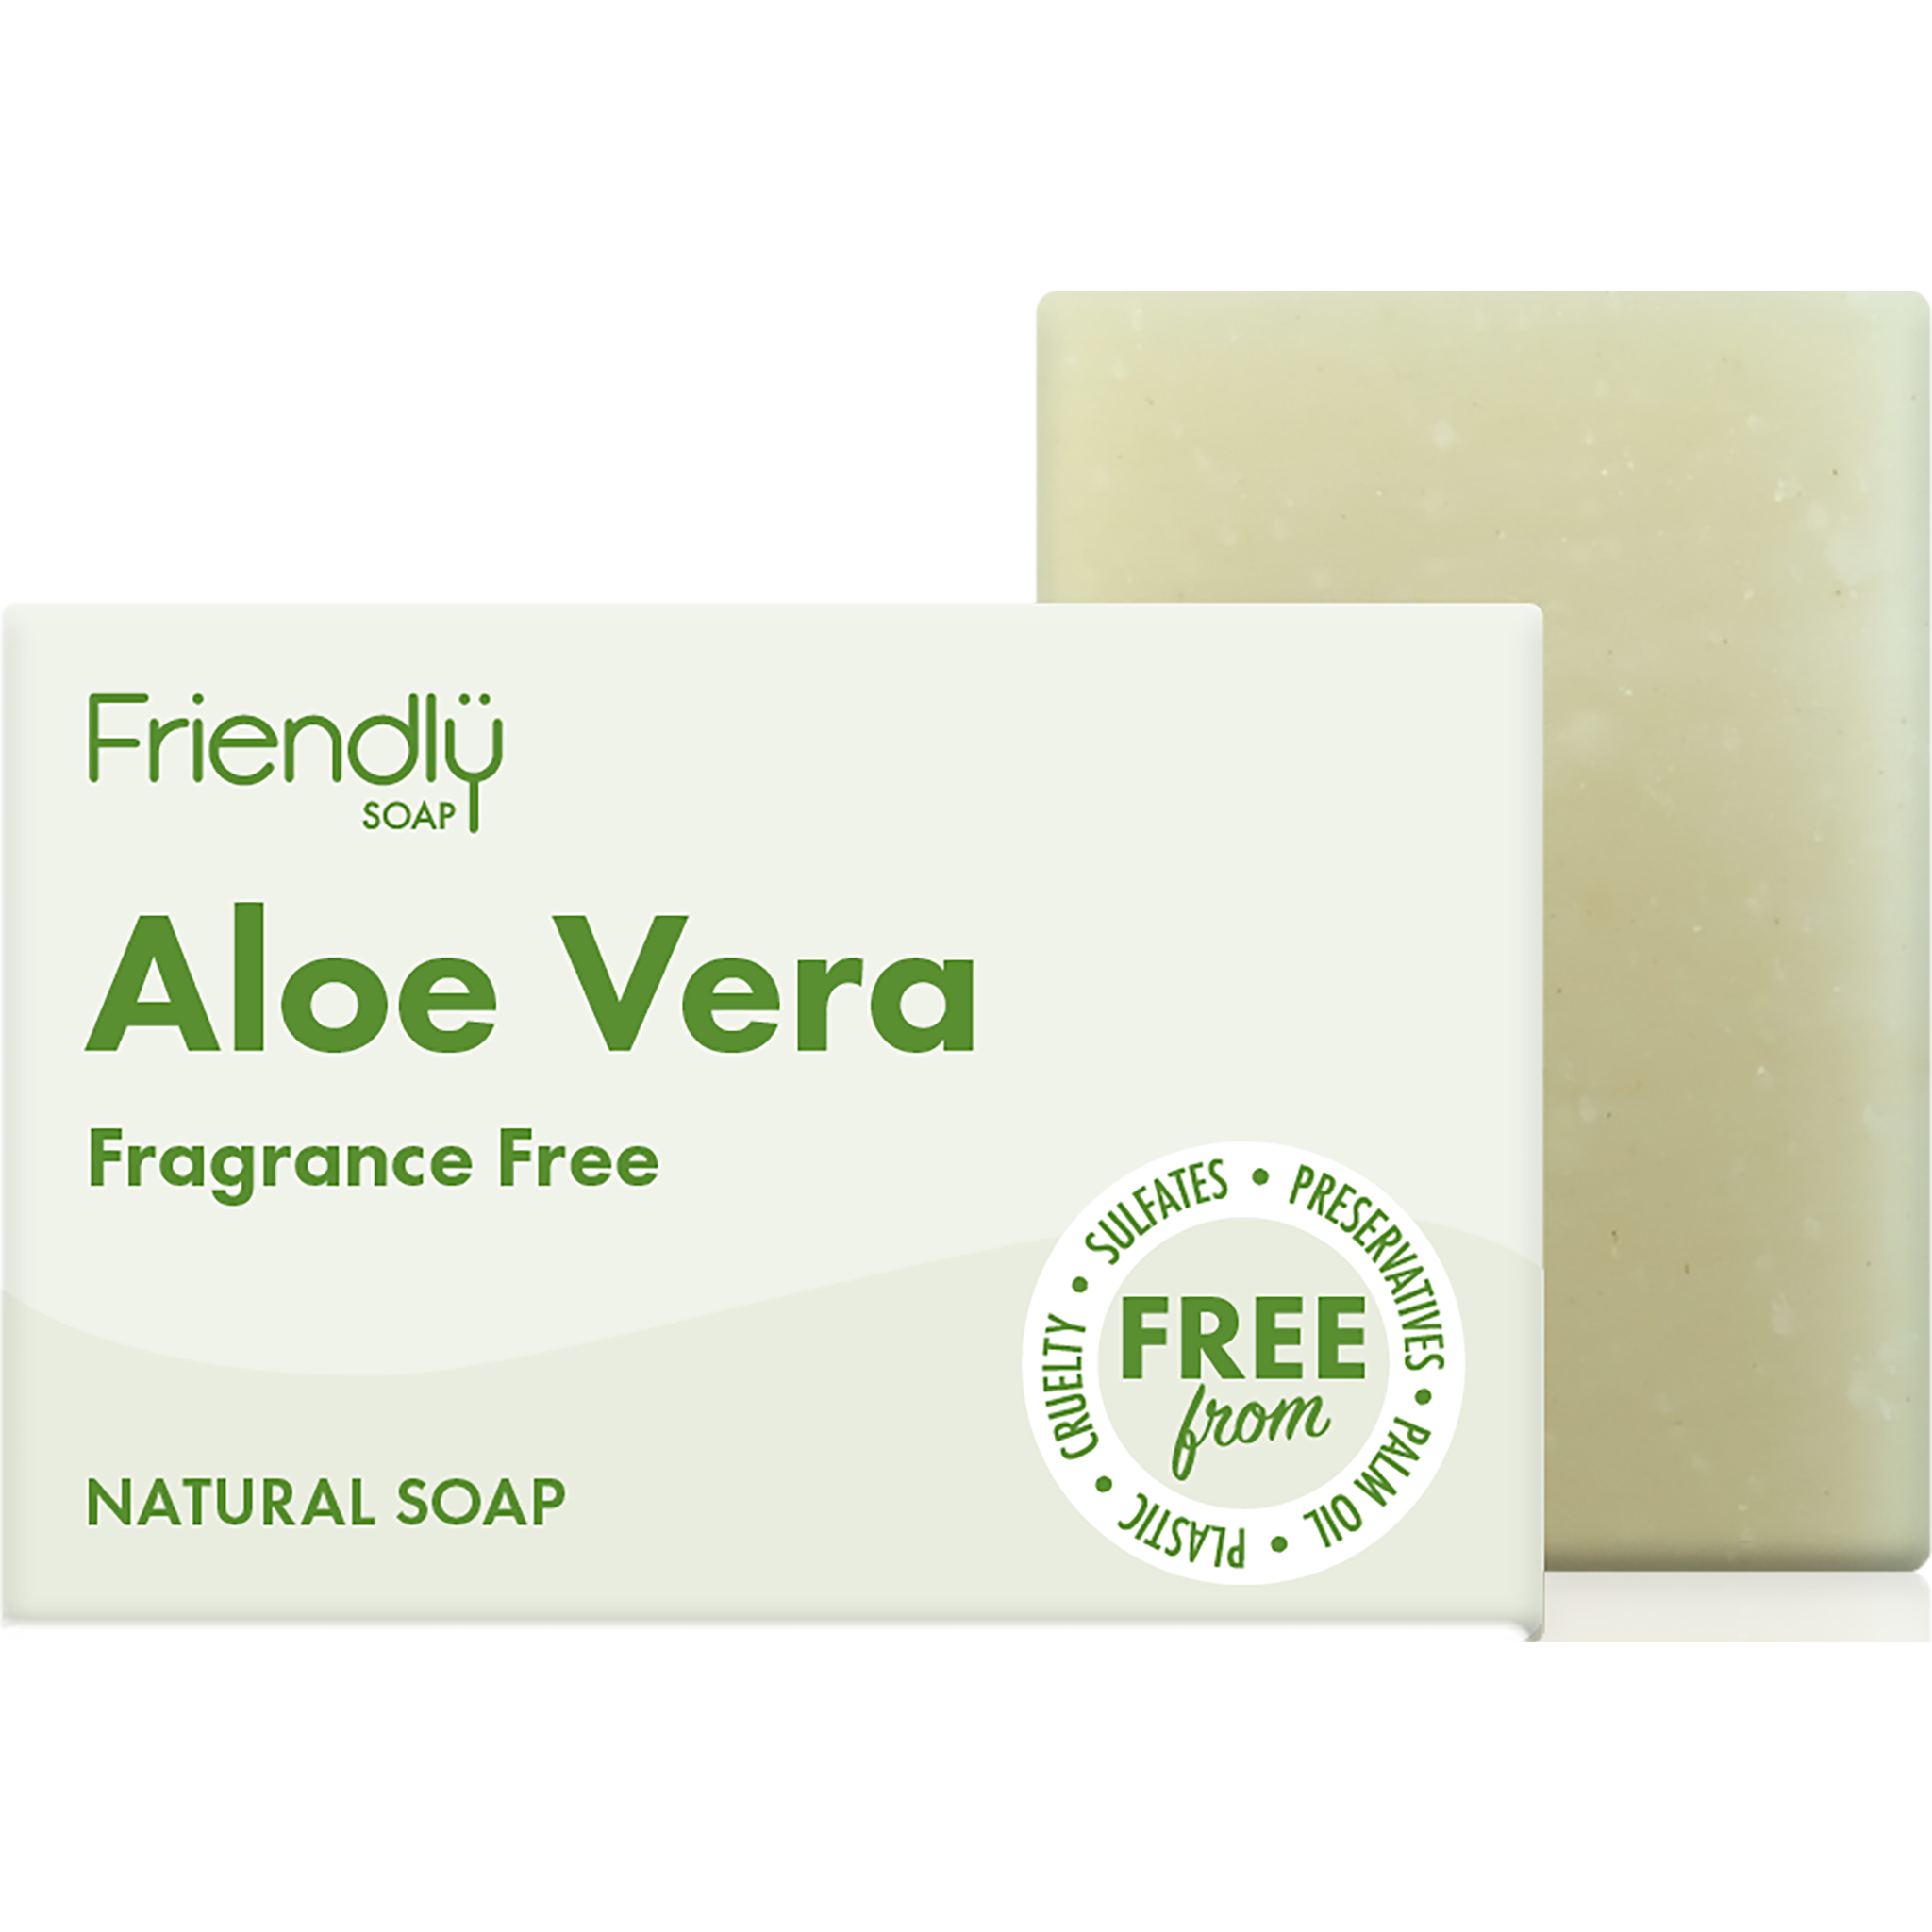 Aloe Vera Fragrance Free